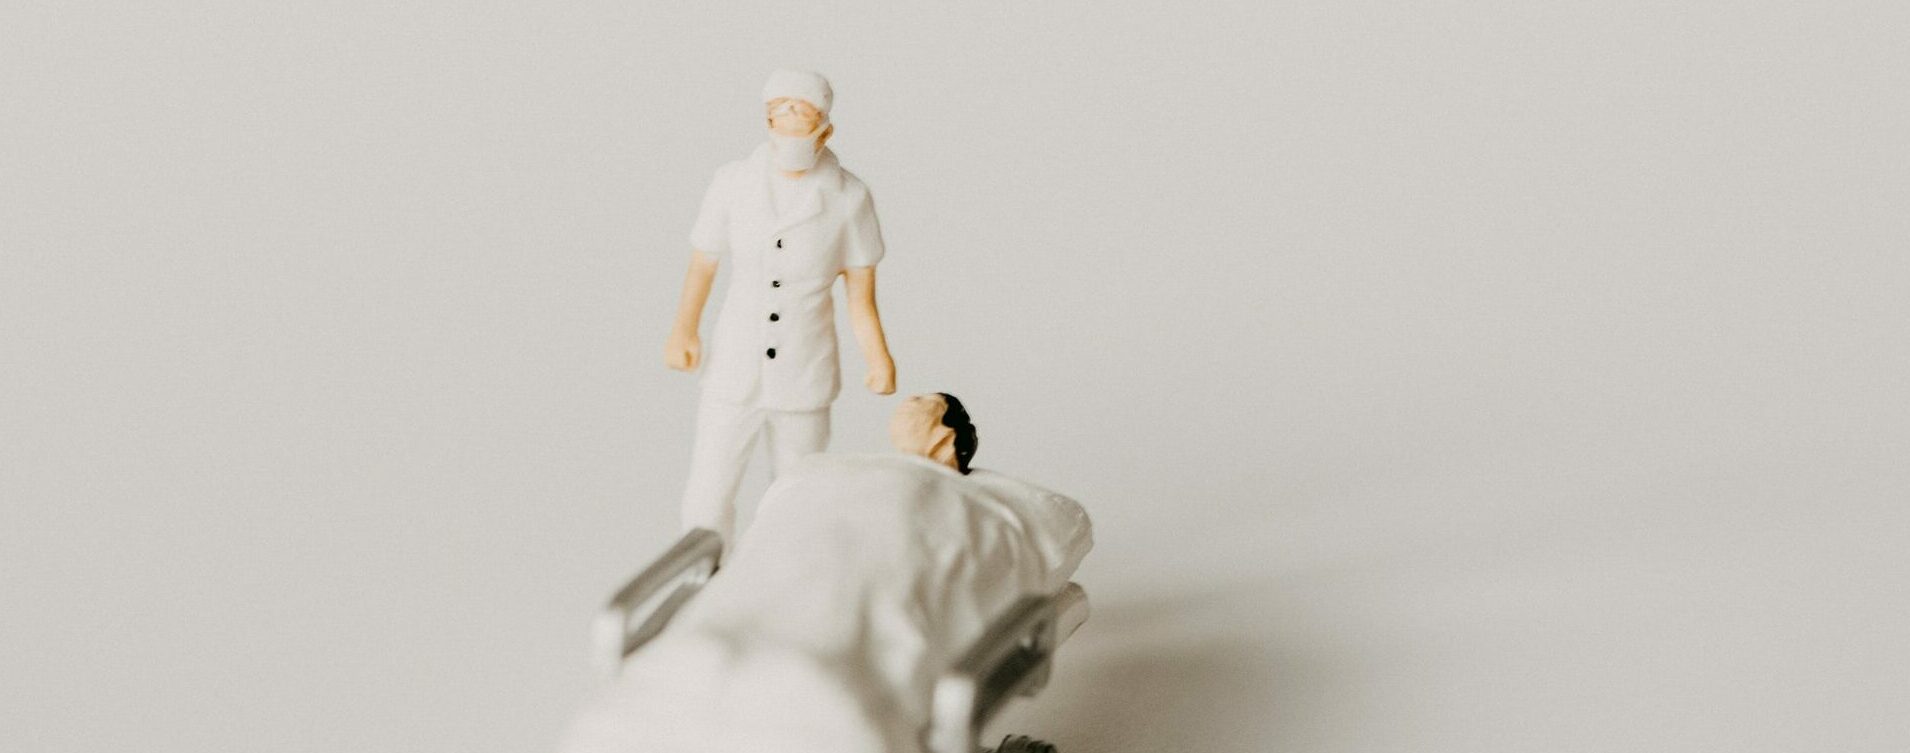 doctor and patient miniature figurine